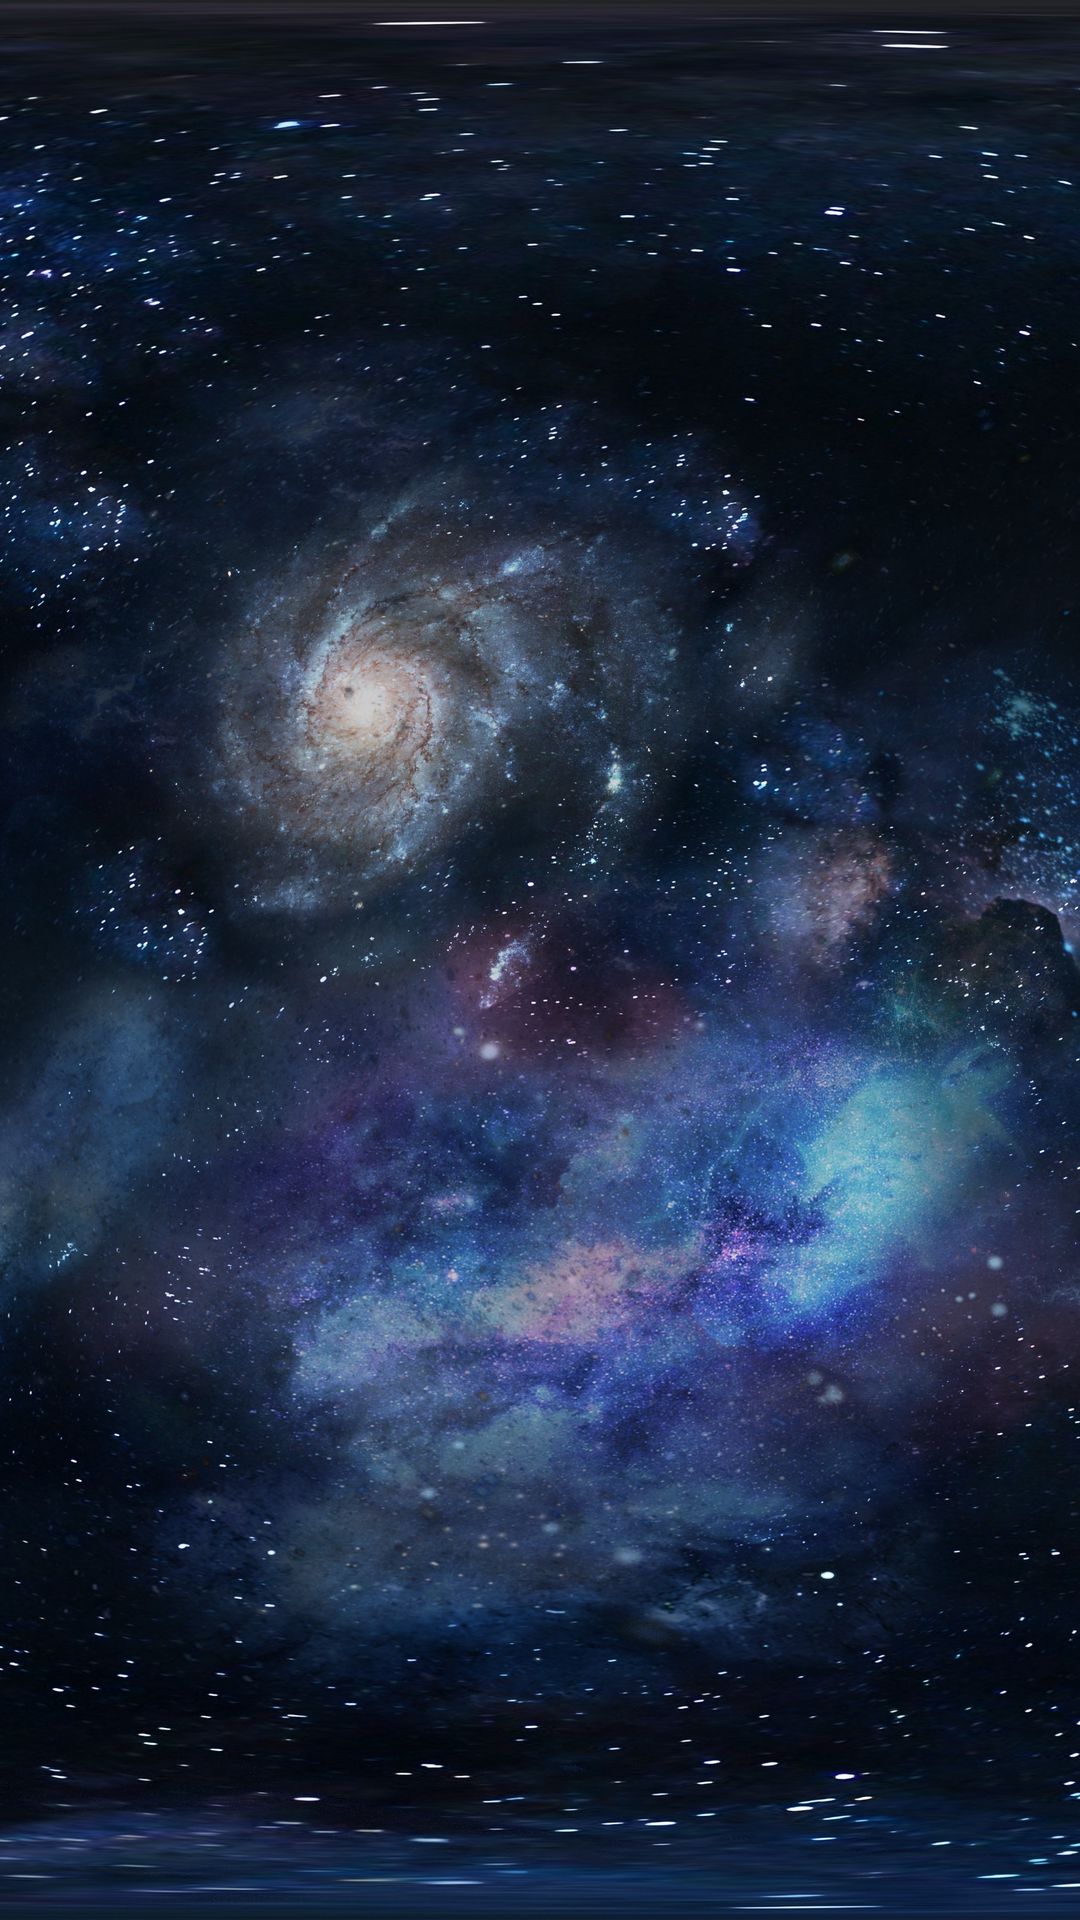 Download wallpaper x galaxy space stars samsung galaxy s s note sony xperia z z z z htc one lenovo vibe hd background